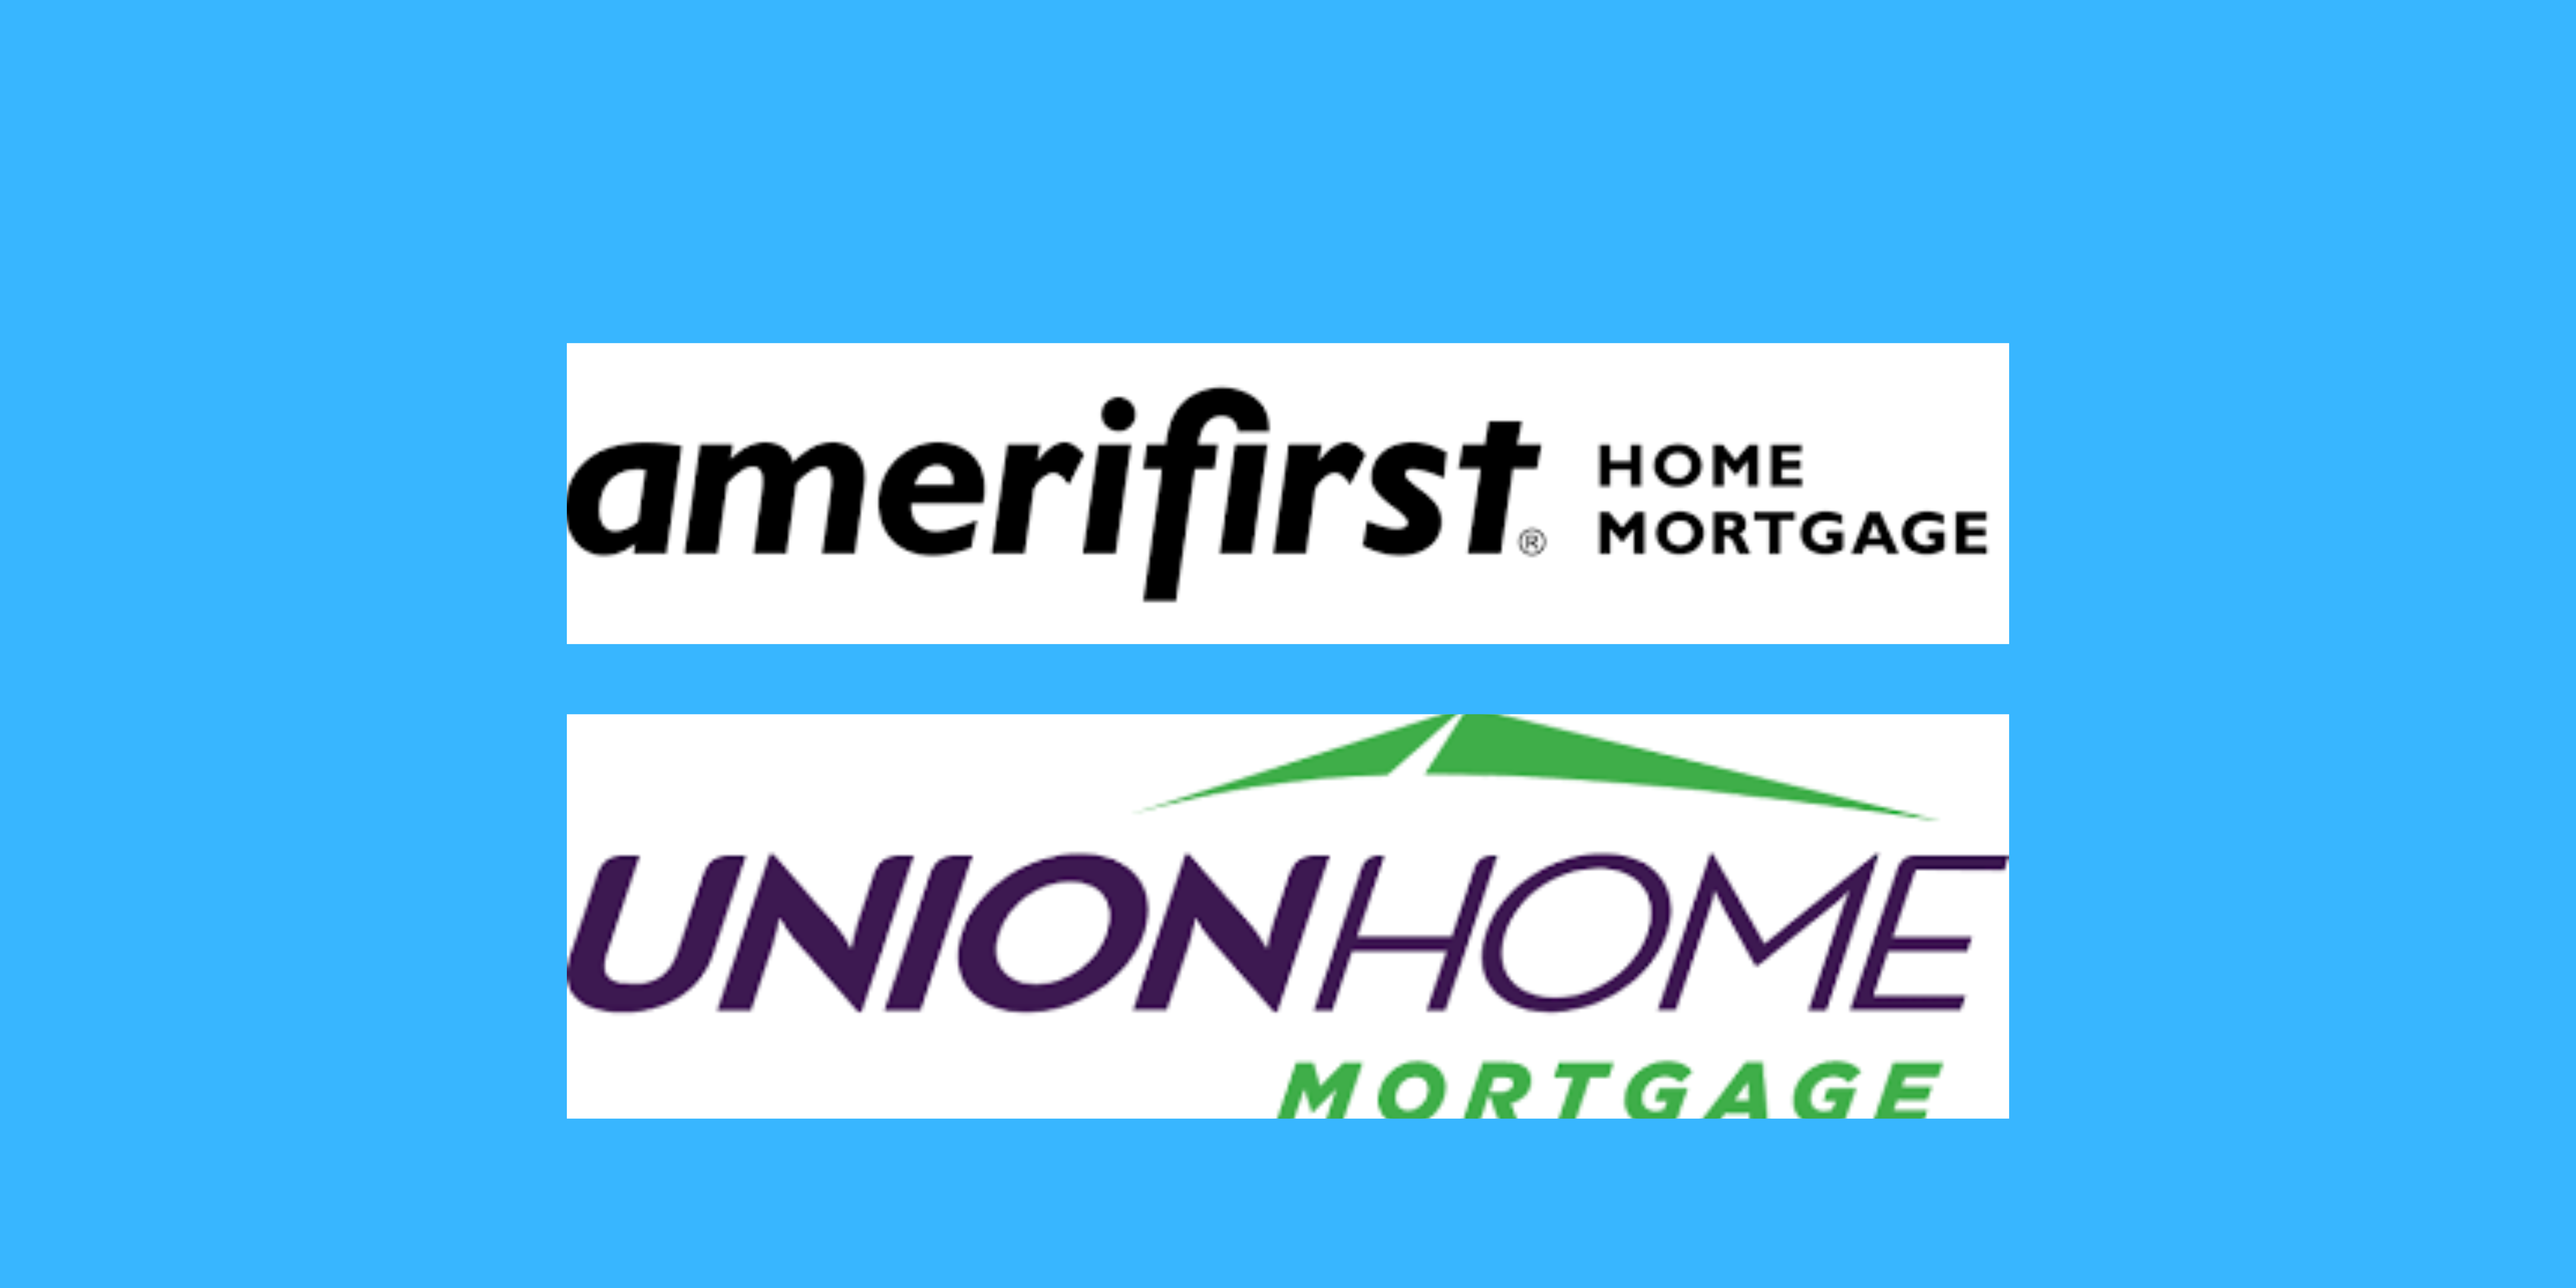 Union Home Mortgage Acquiring Amerifirst